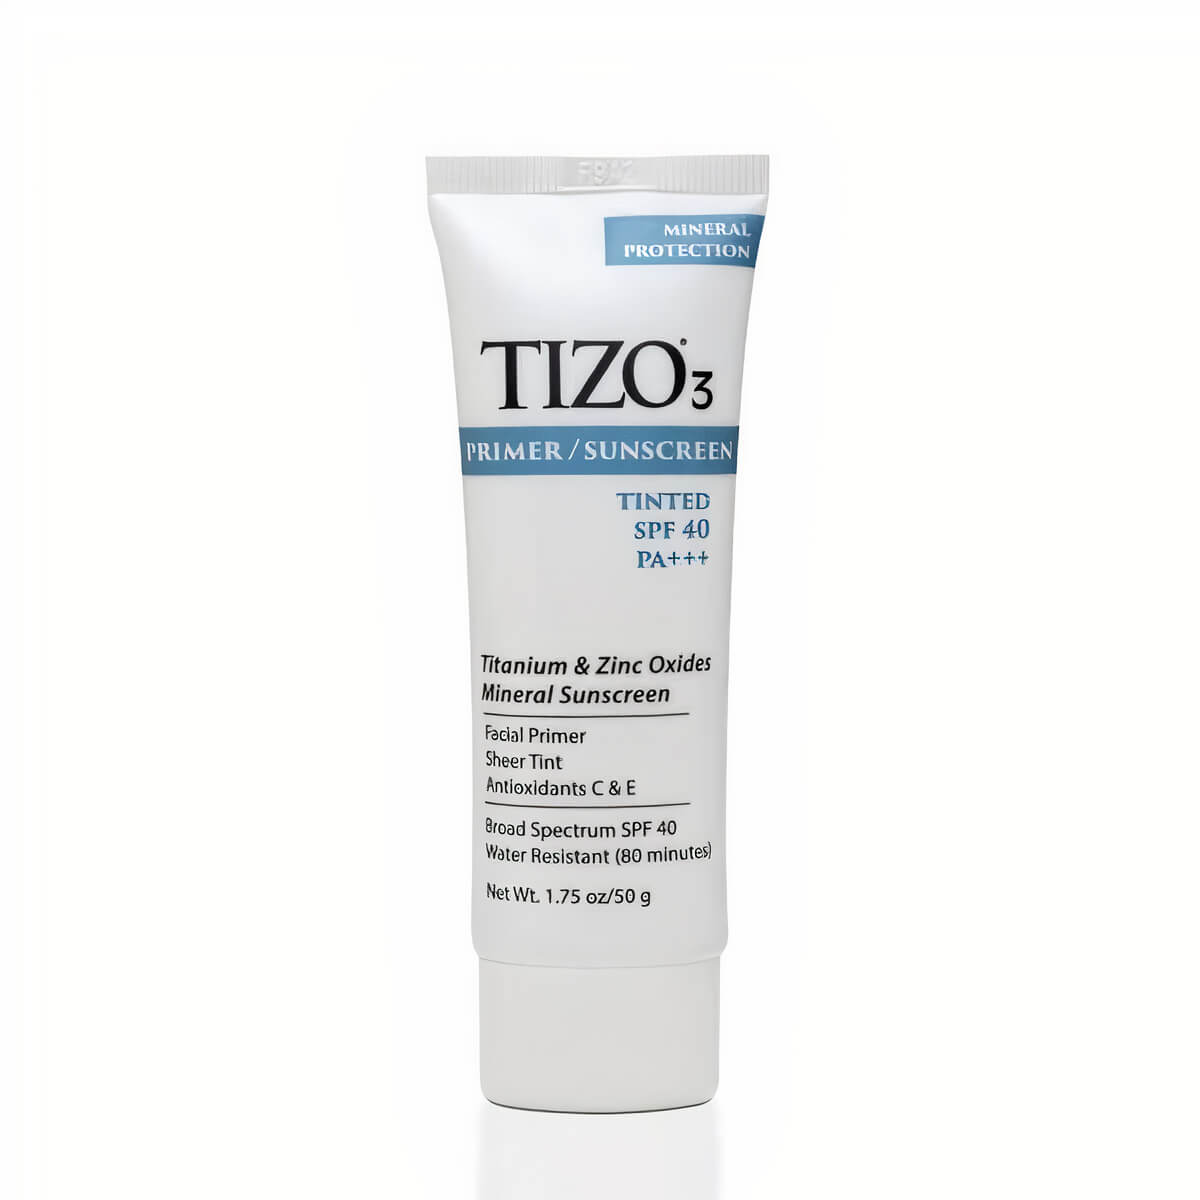 Tizo 3 Tinted Mineral Facial Sunscreen